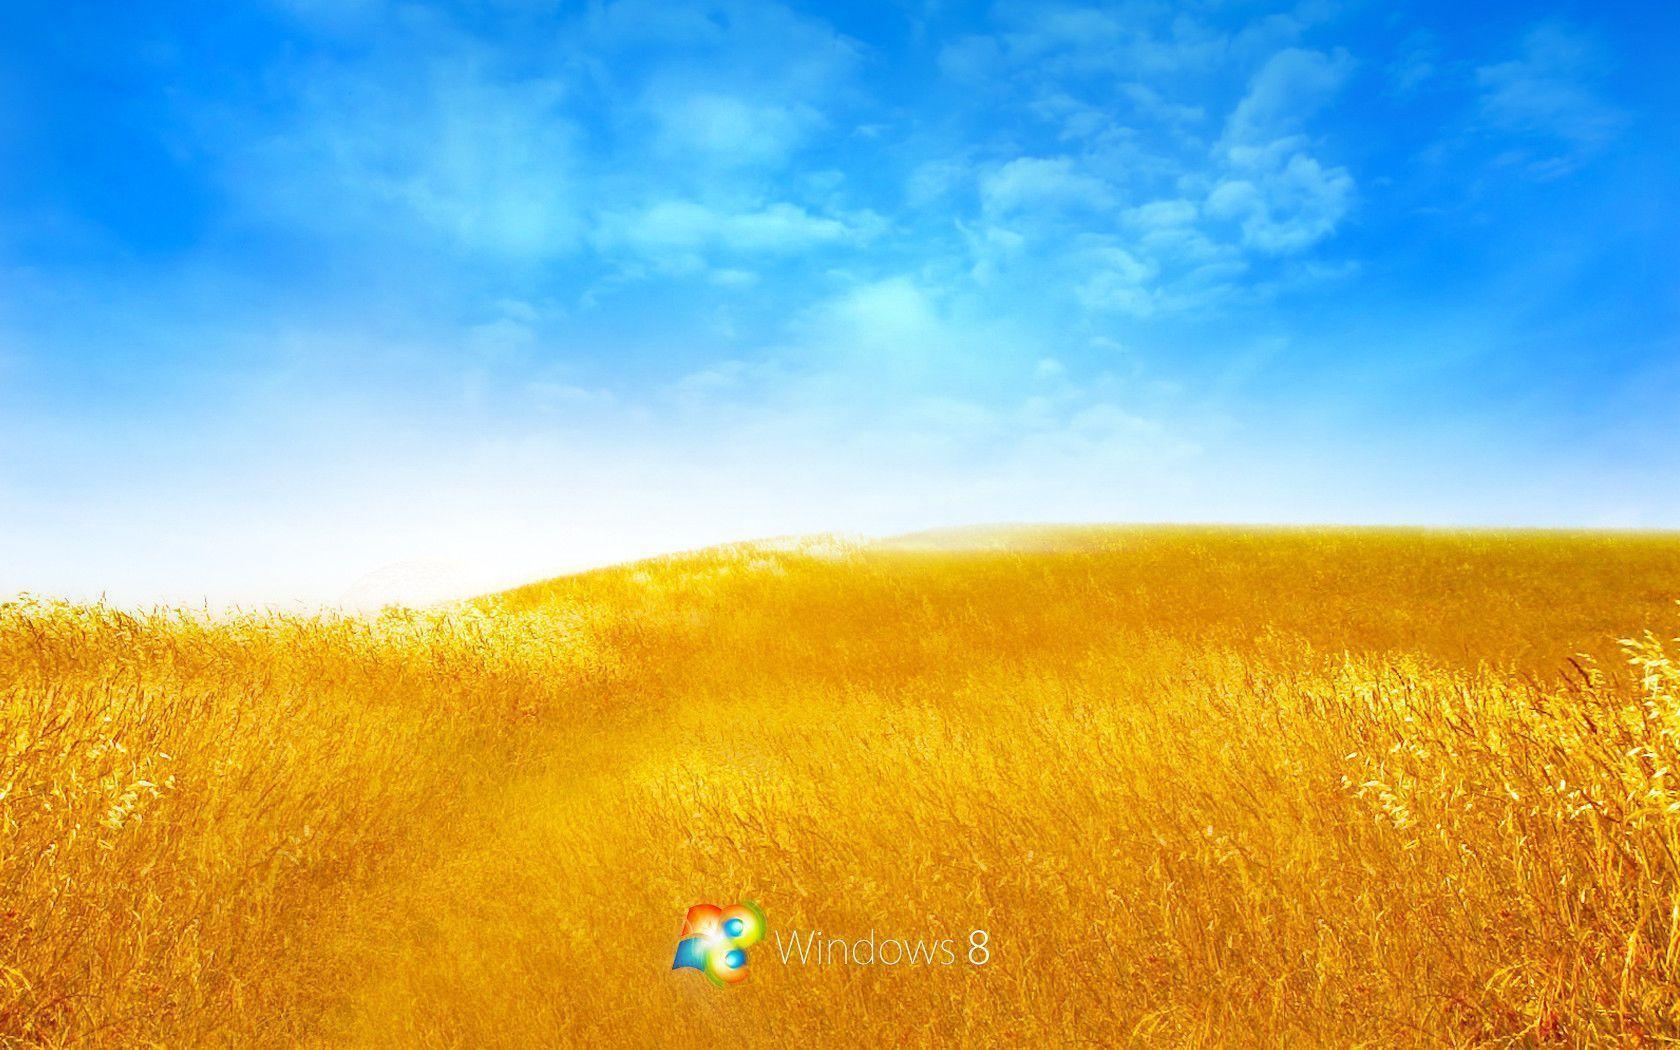 Windows 8 Wallpaper Free Download HD Wallpaper. Genovic